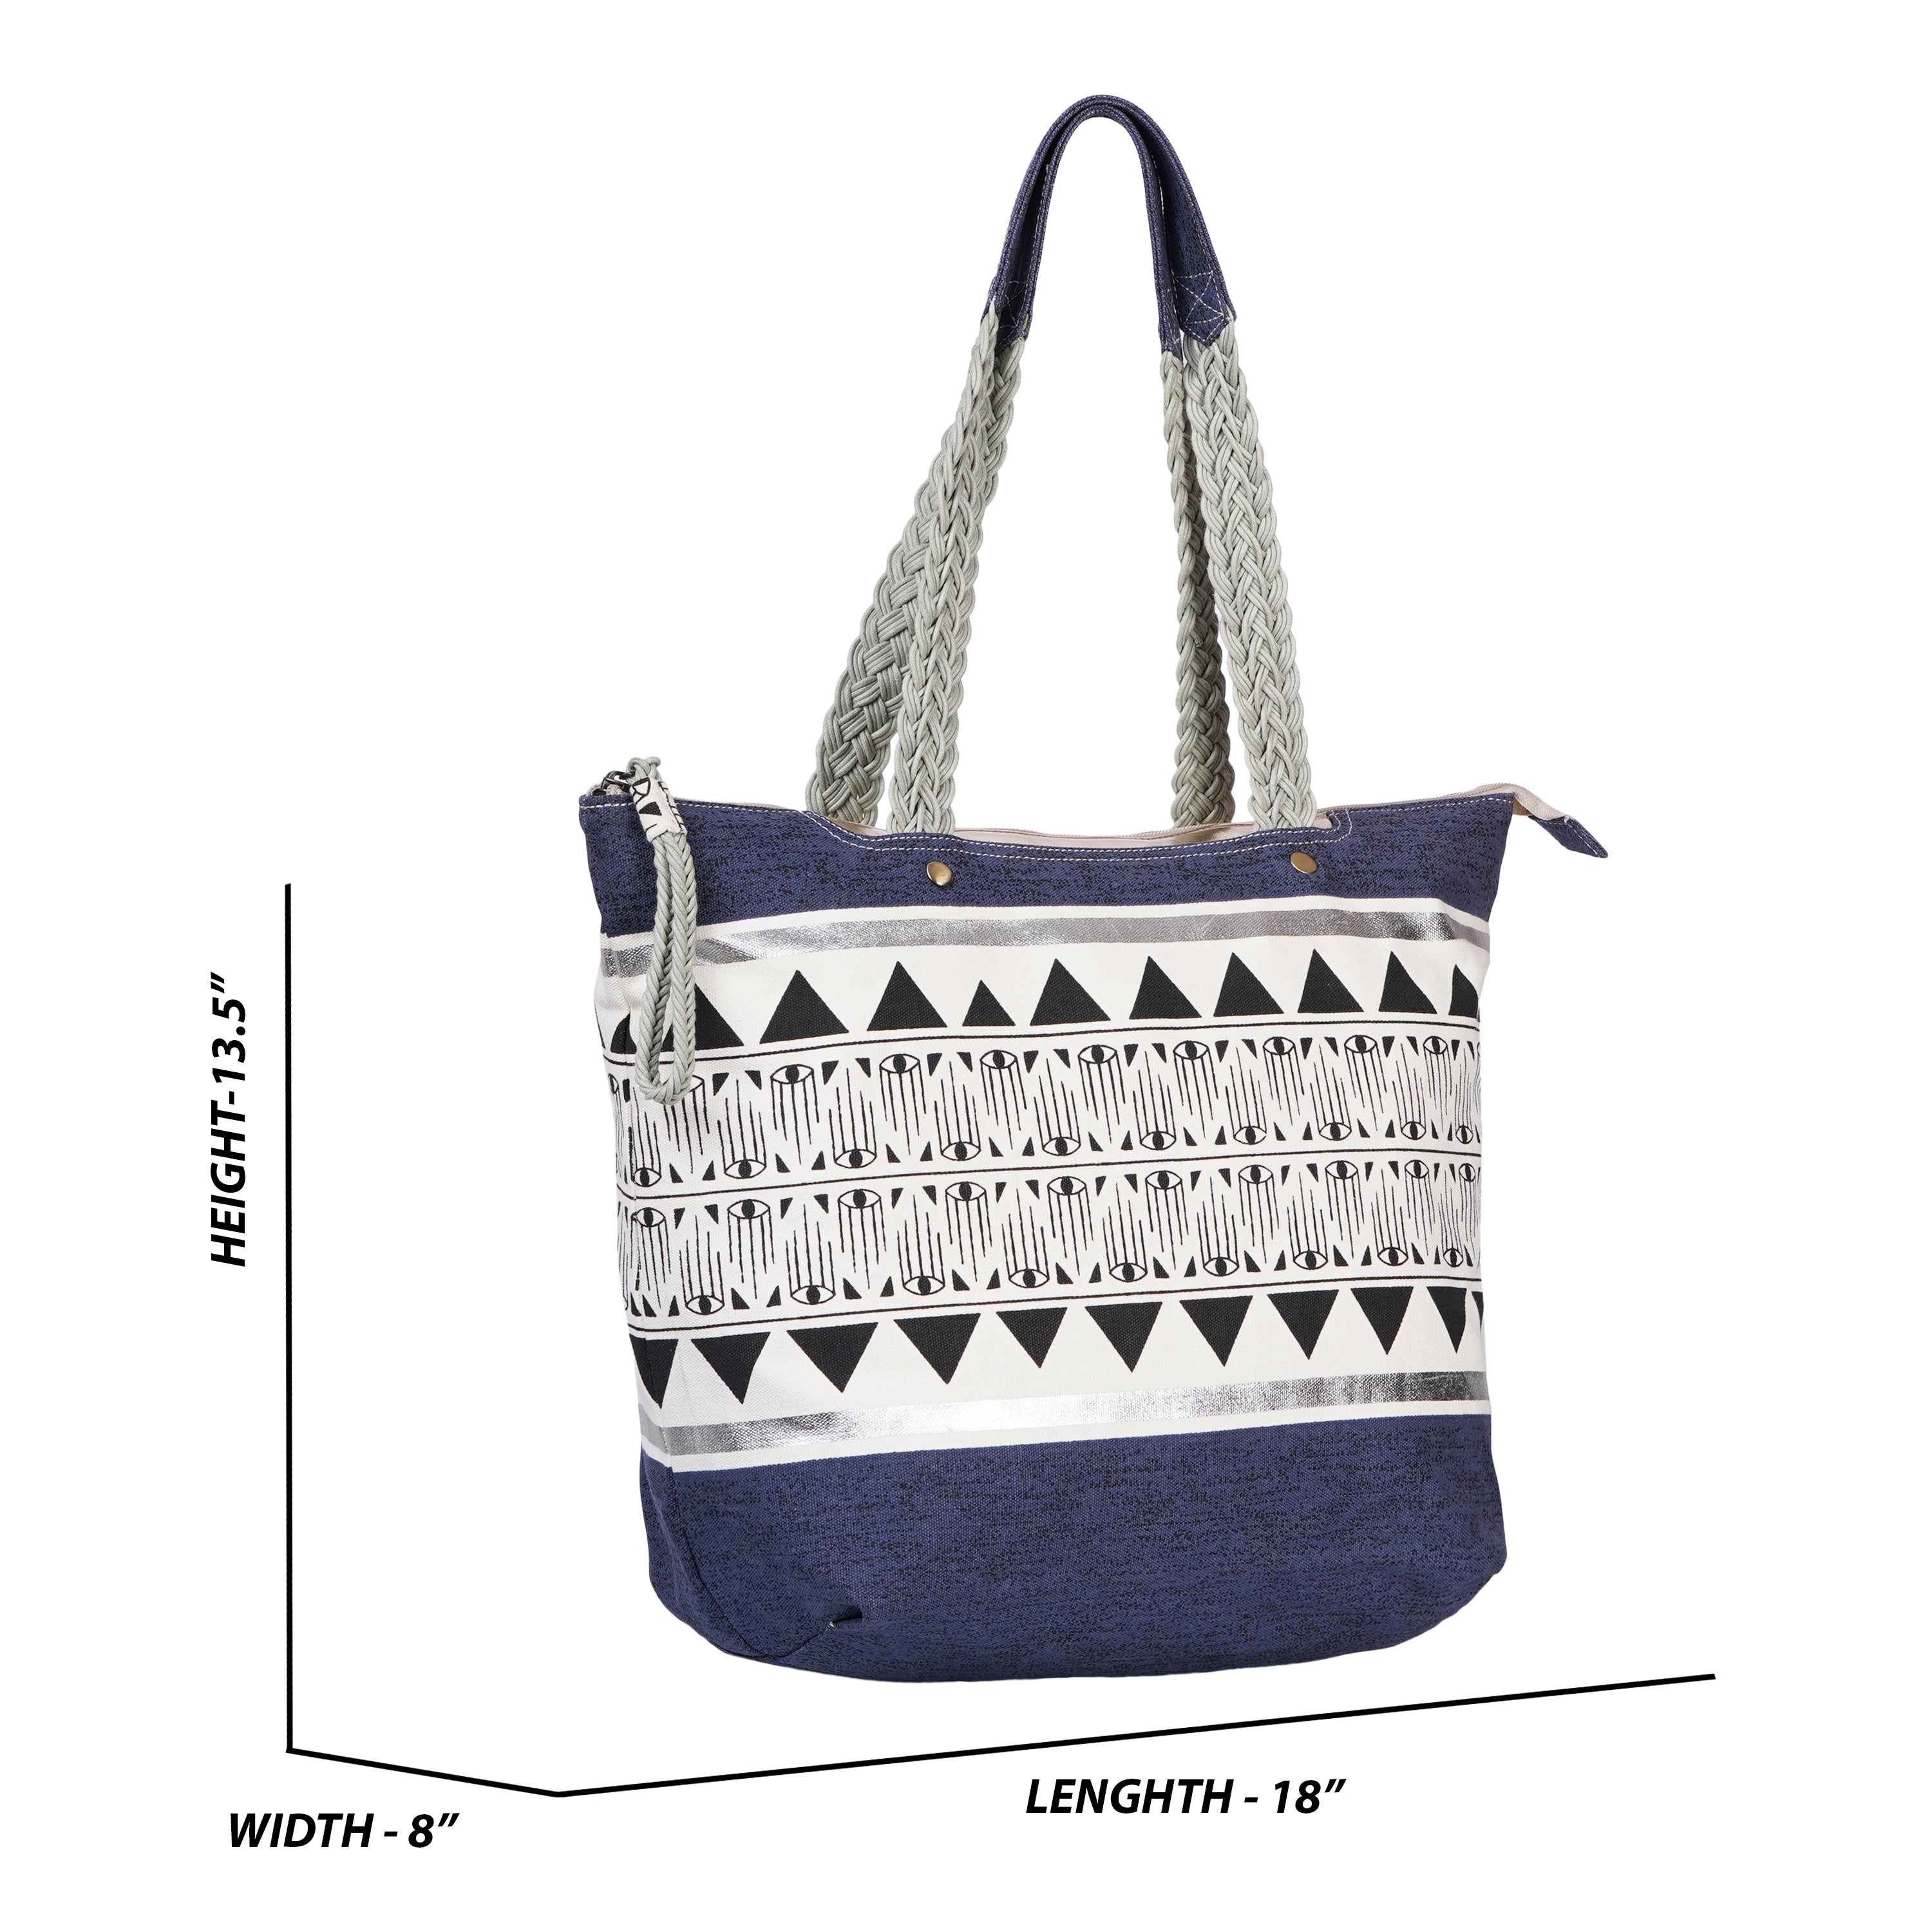 Klim Big Bag | 18x8x13.5 Inches | Spacious and Stylish Travel Companion